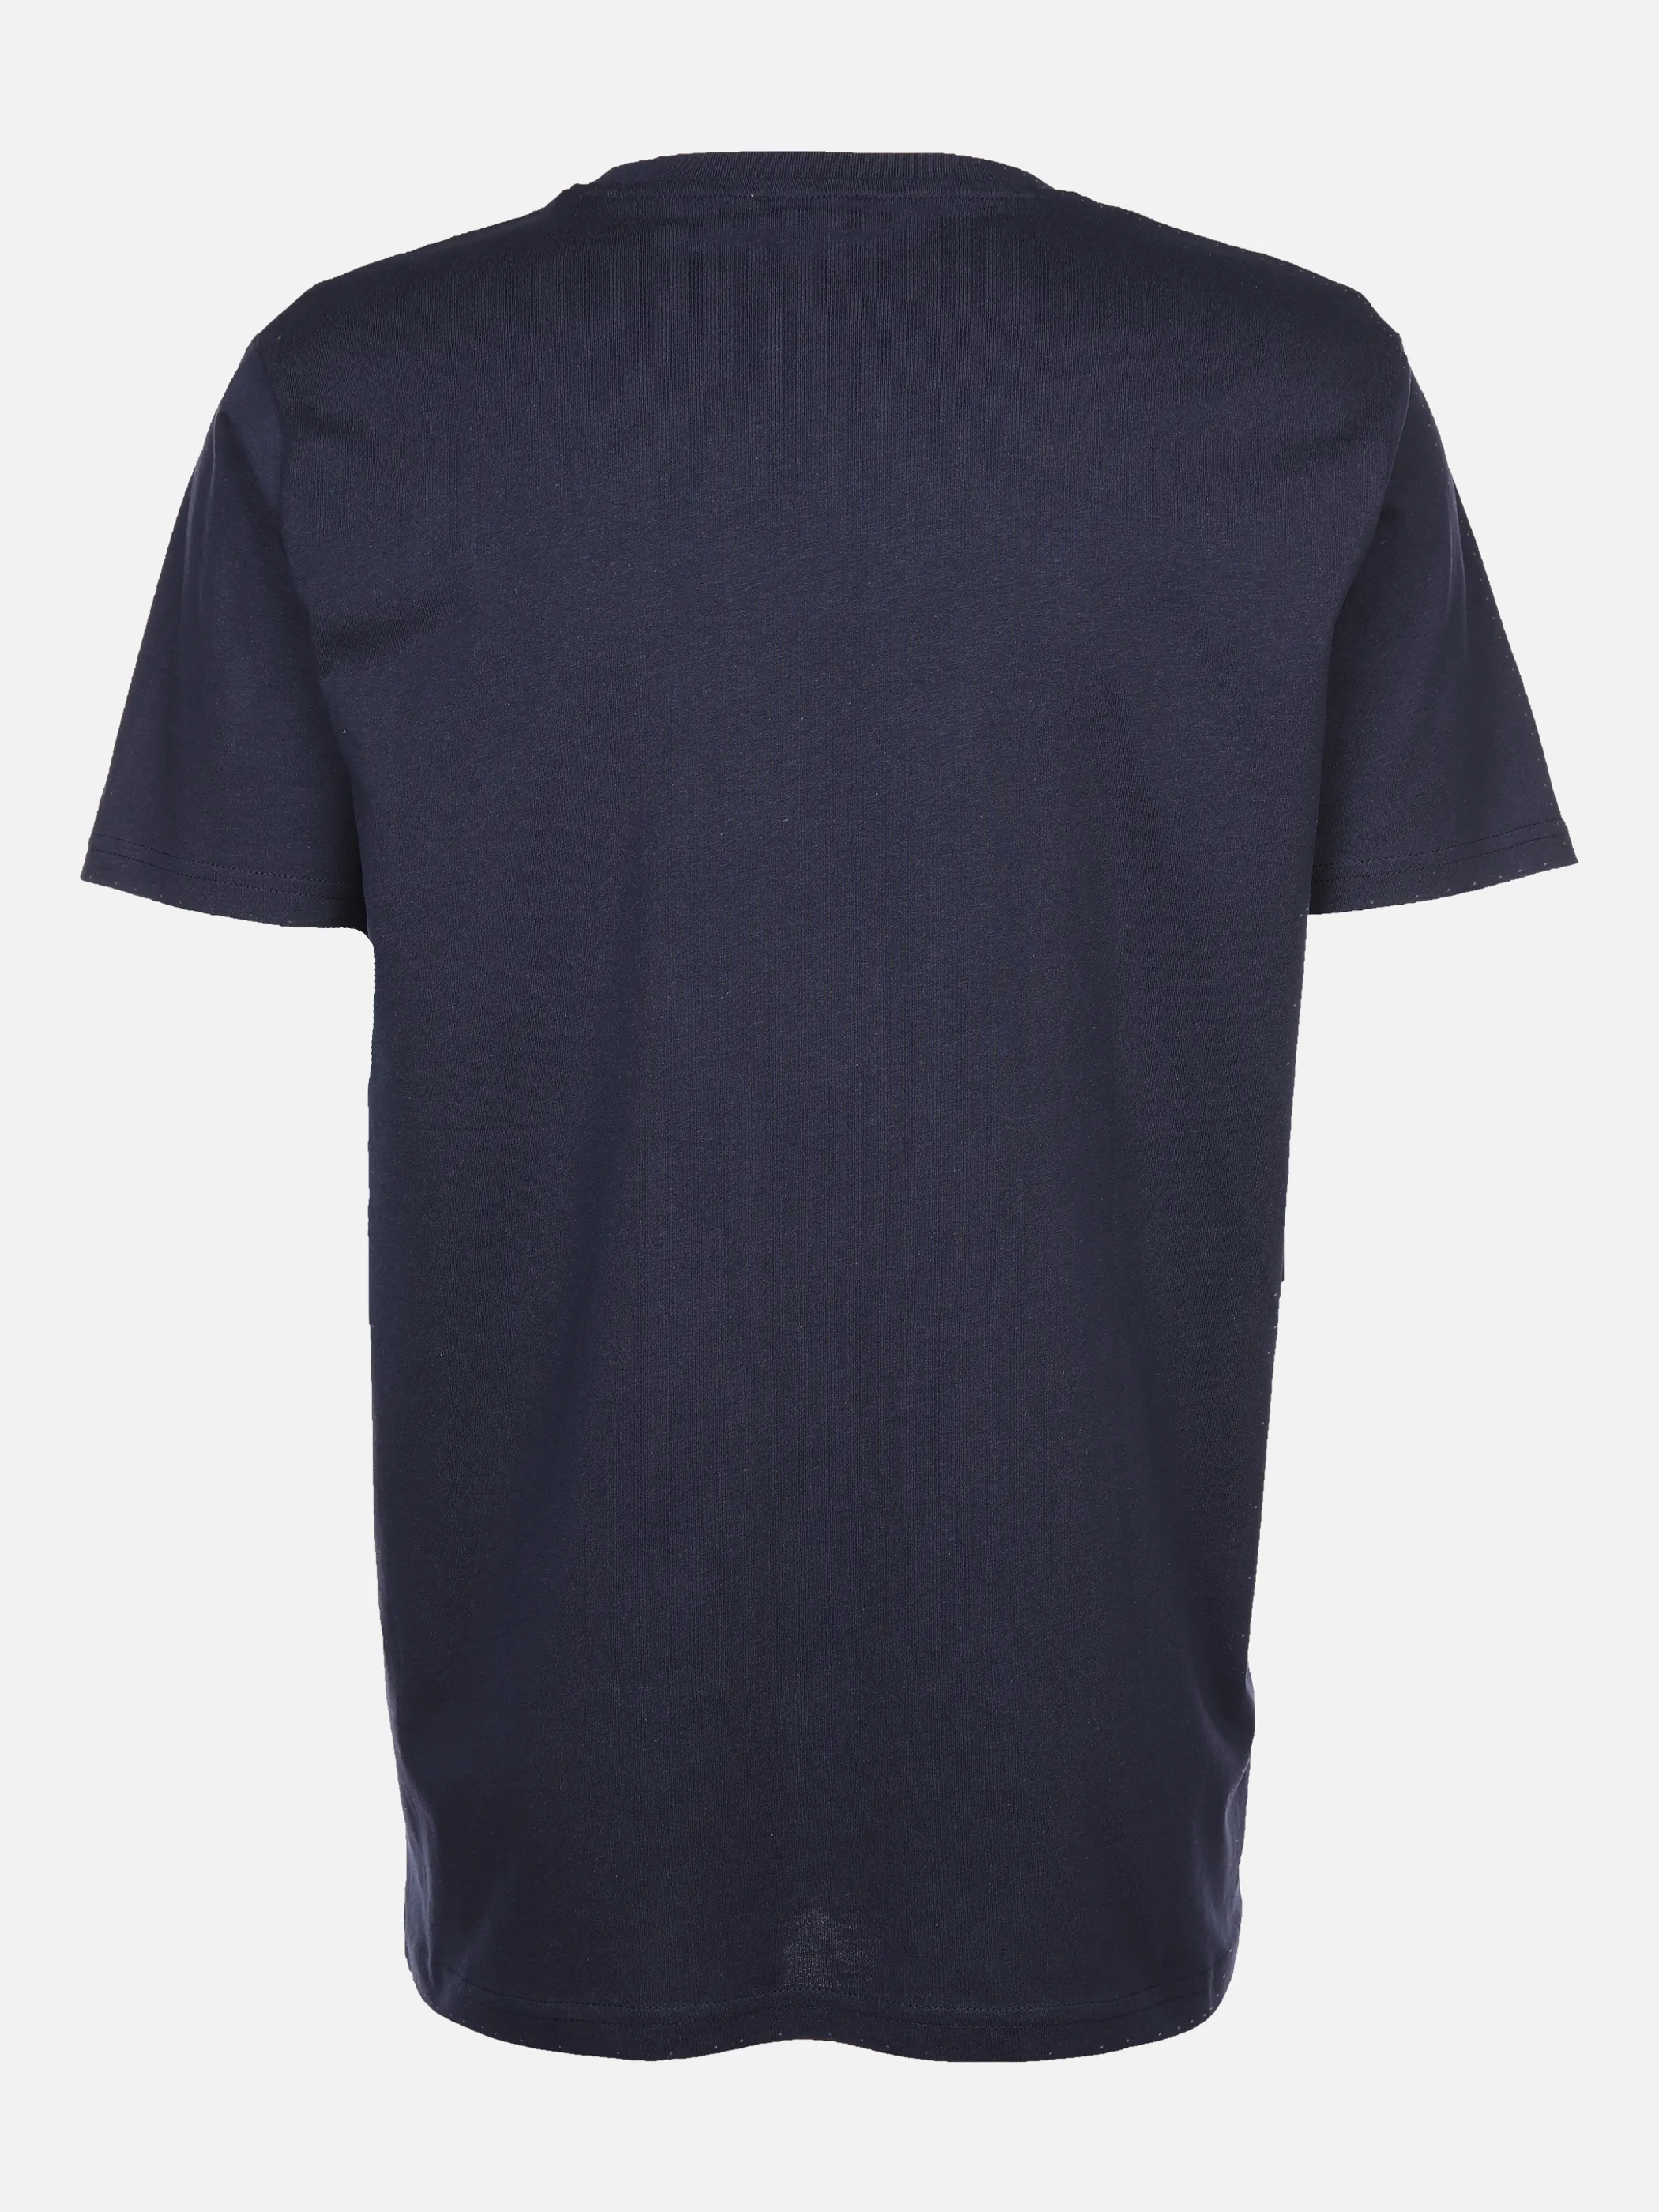 U.S. Polo Assn. He. T-Shirt 1/2 Arm Logo 1890 Blau 881277 NAVY 2